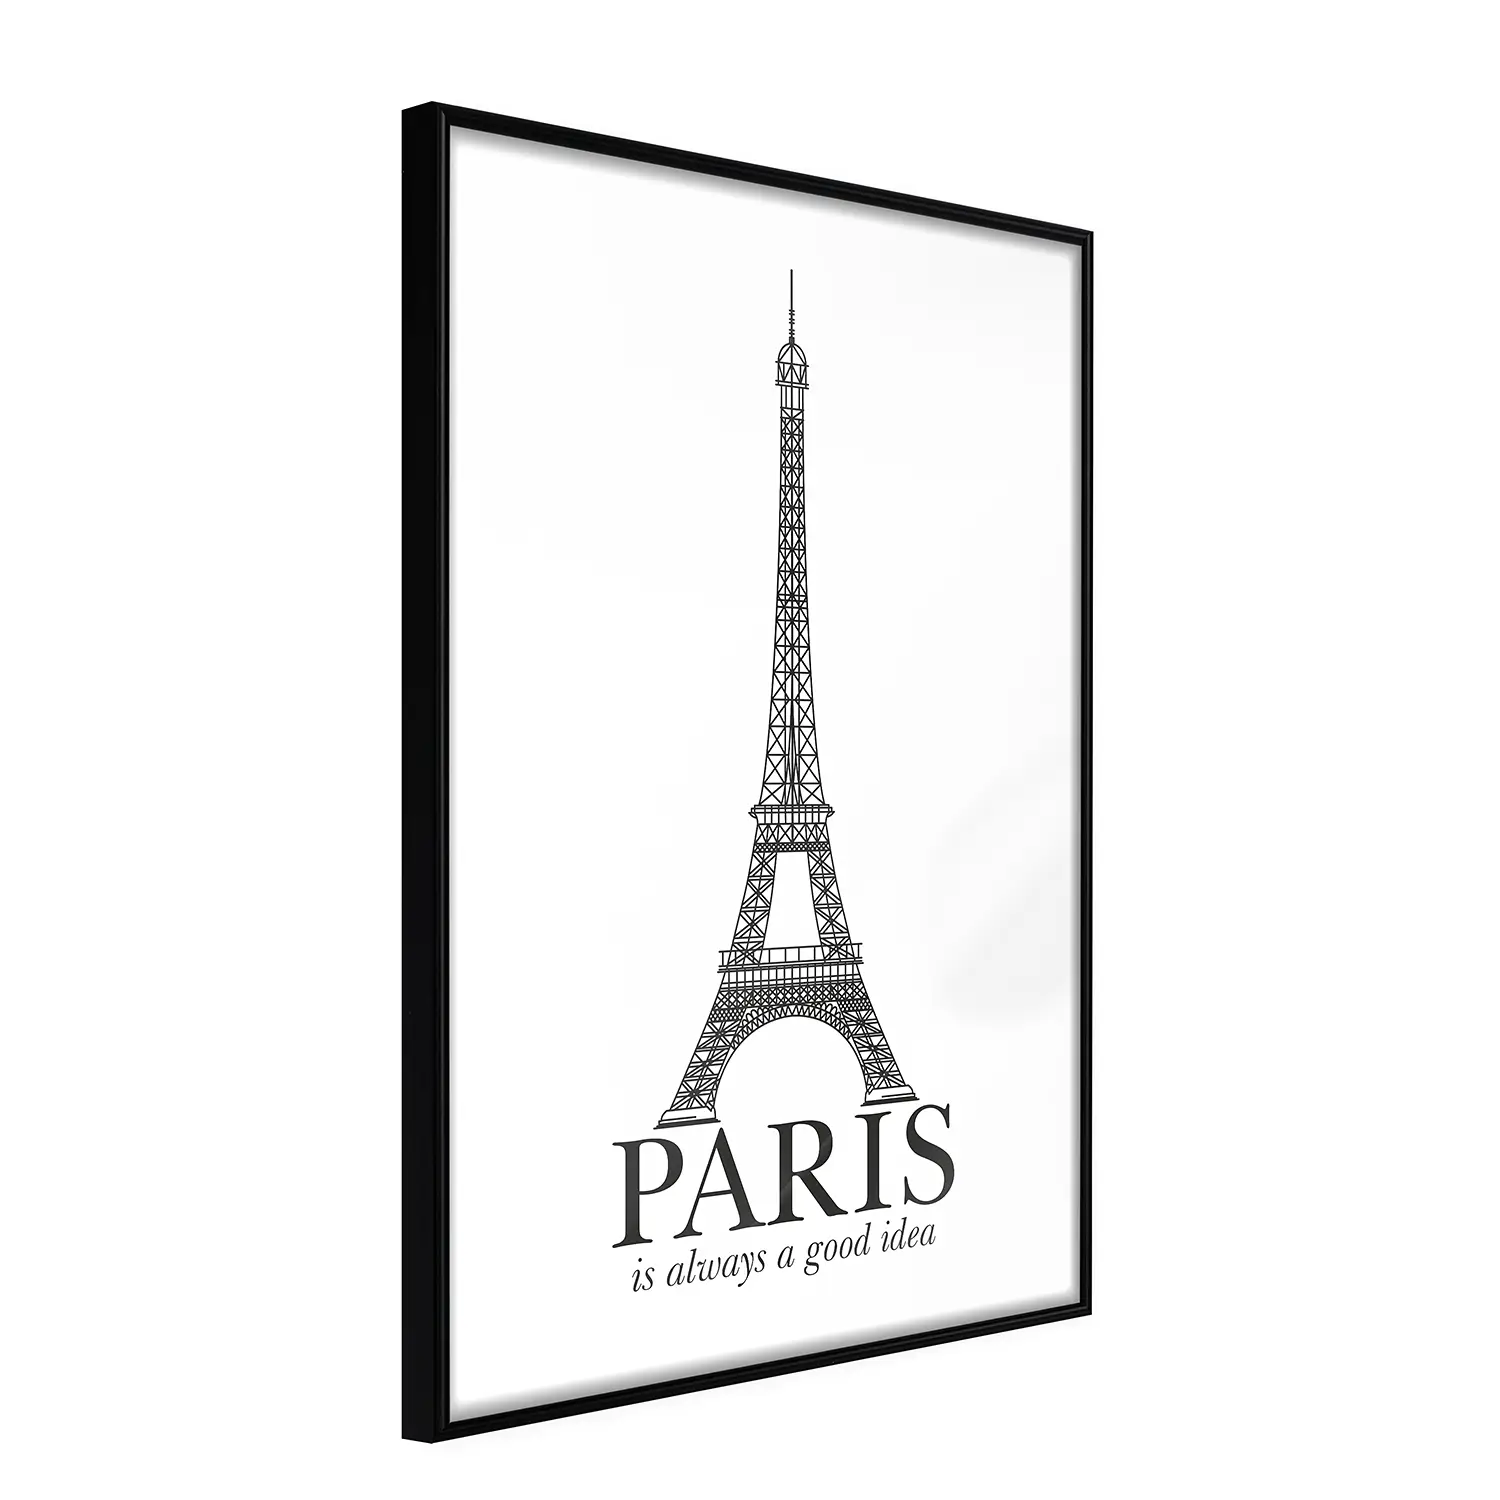 Paris Idea a Poster Is Always Good